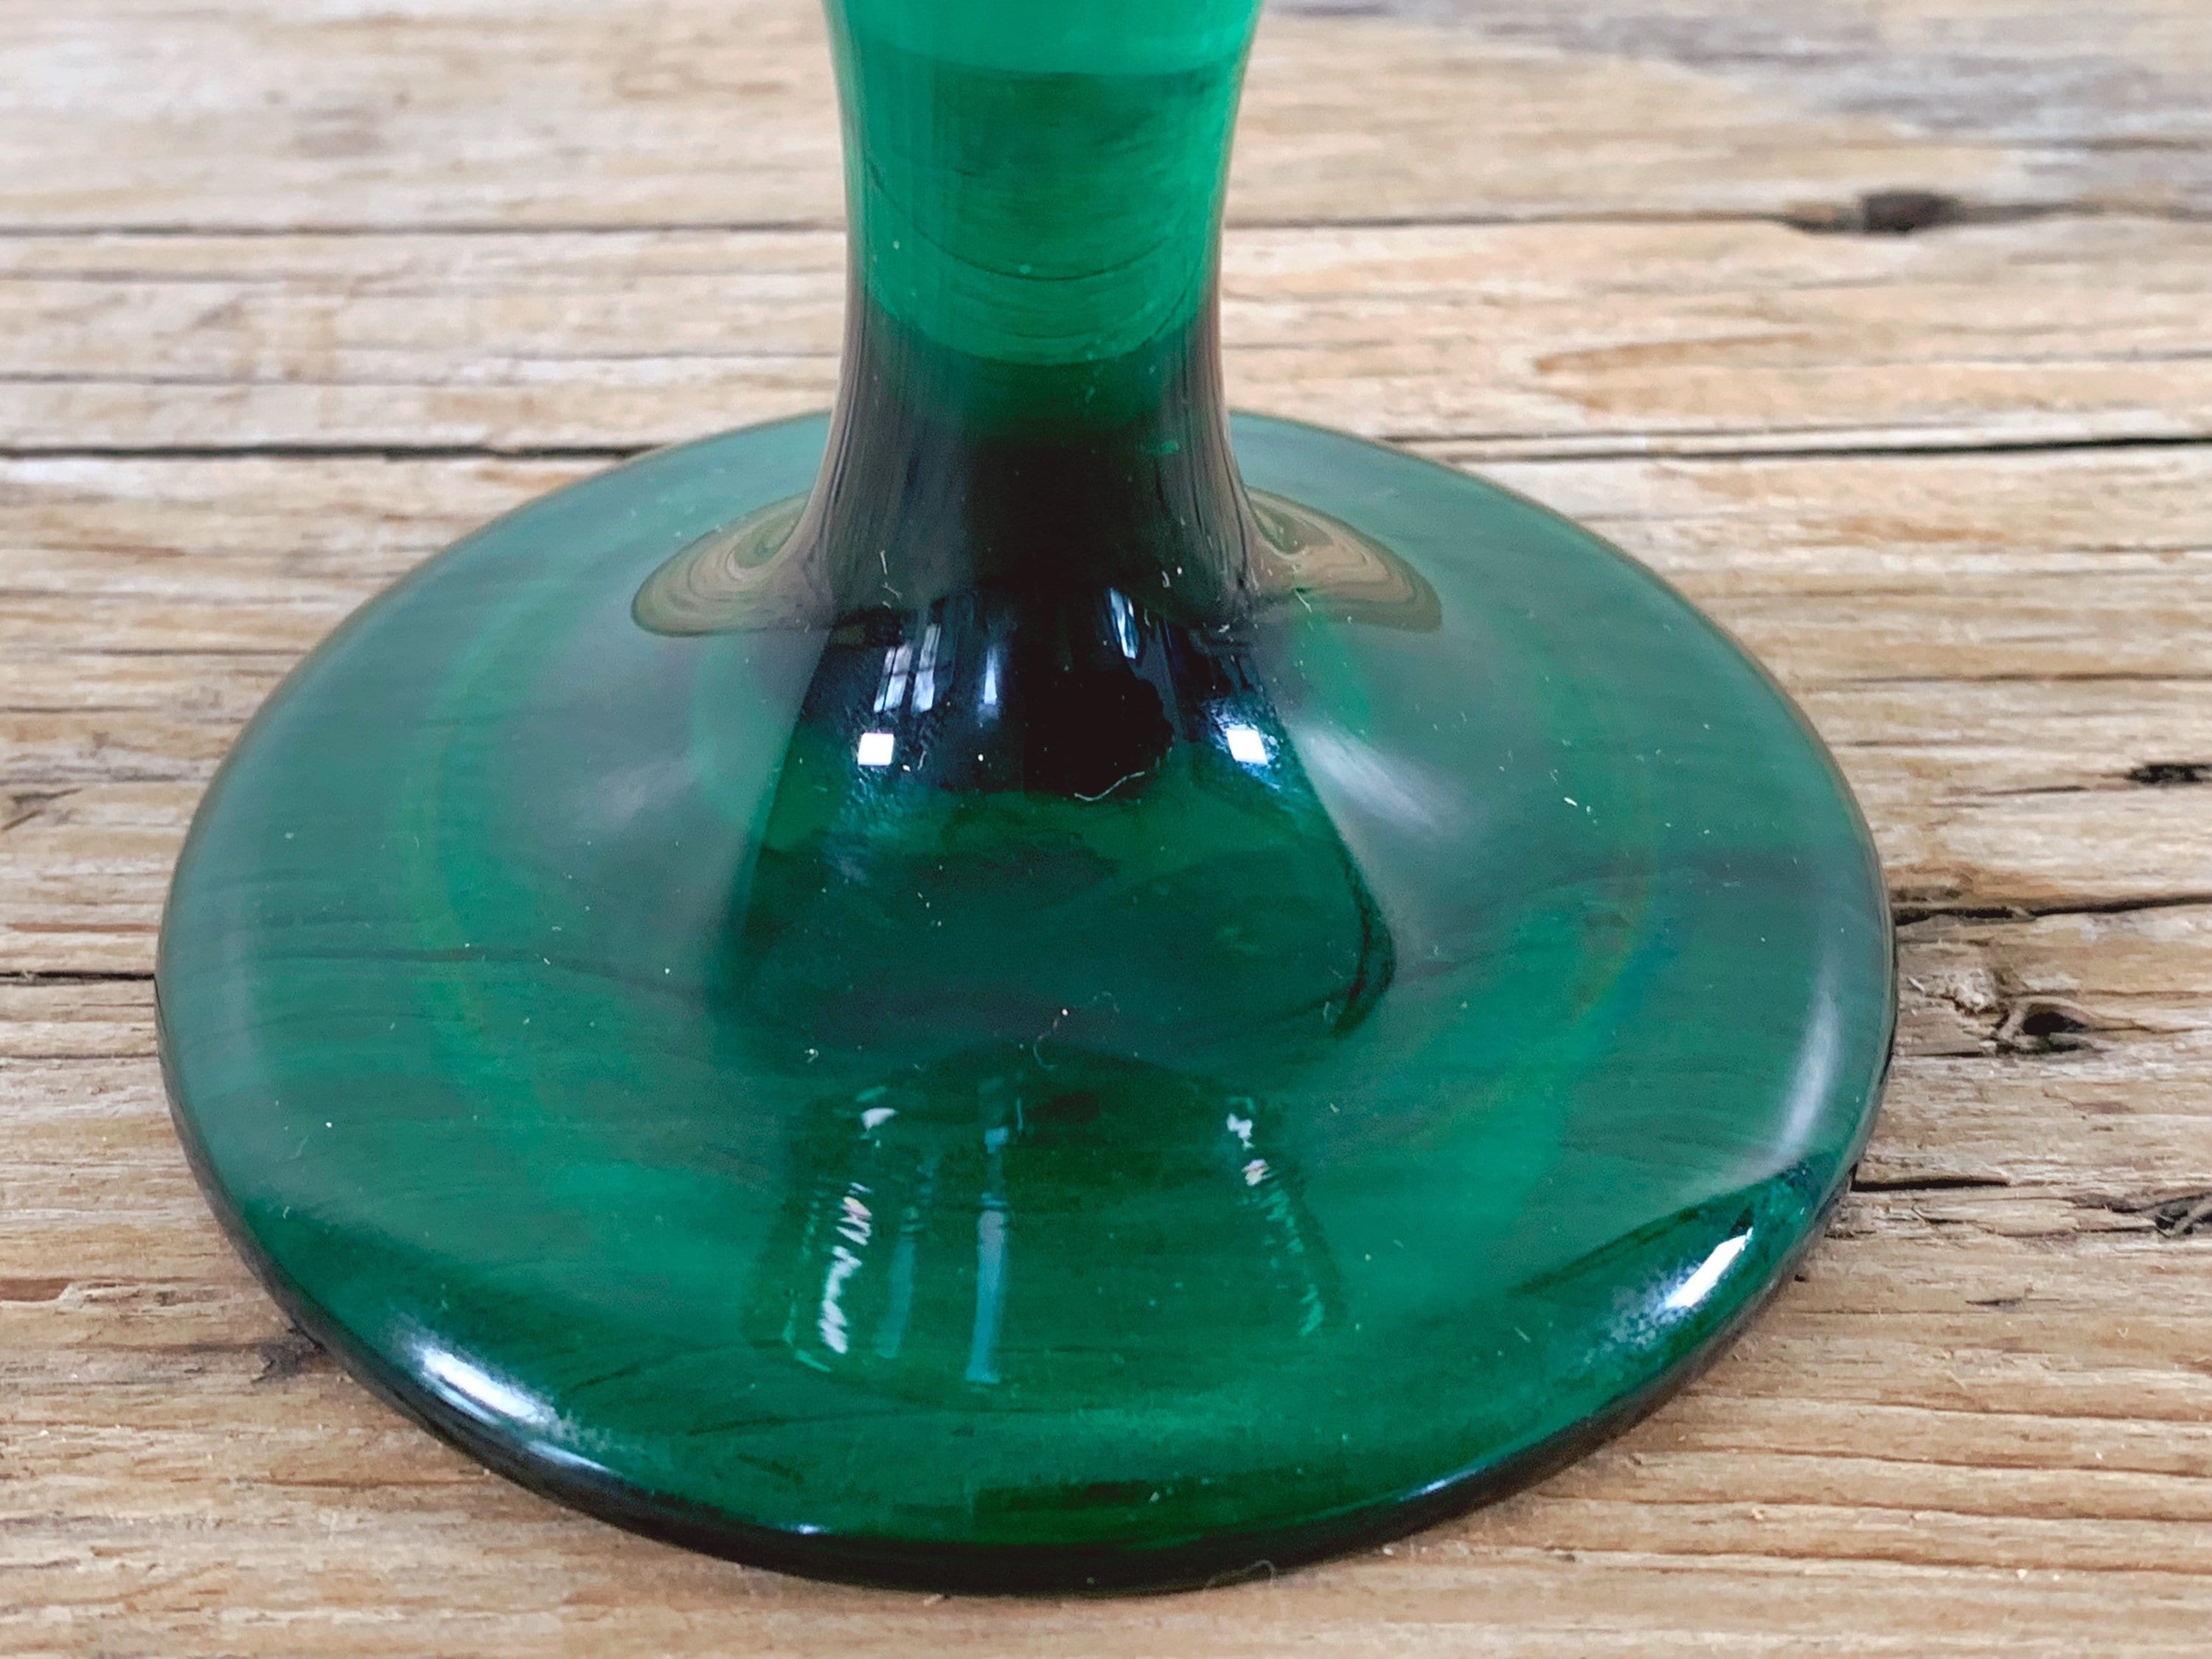 Vintage 'Libbey' Wine Glasses in 'Juniper Green' (Set of 4)